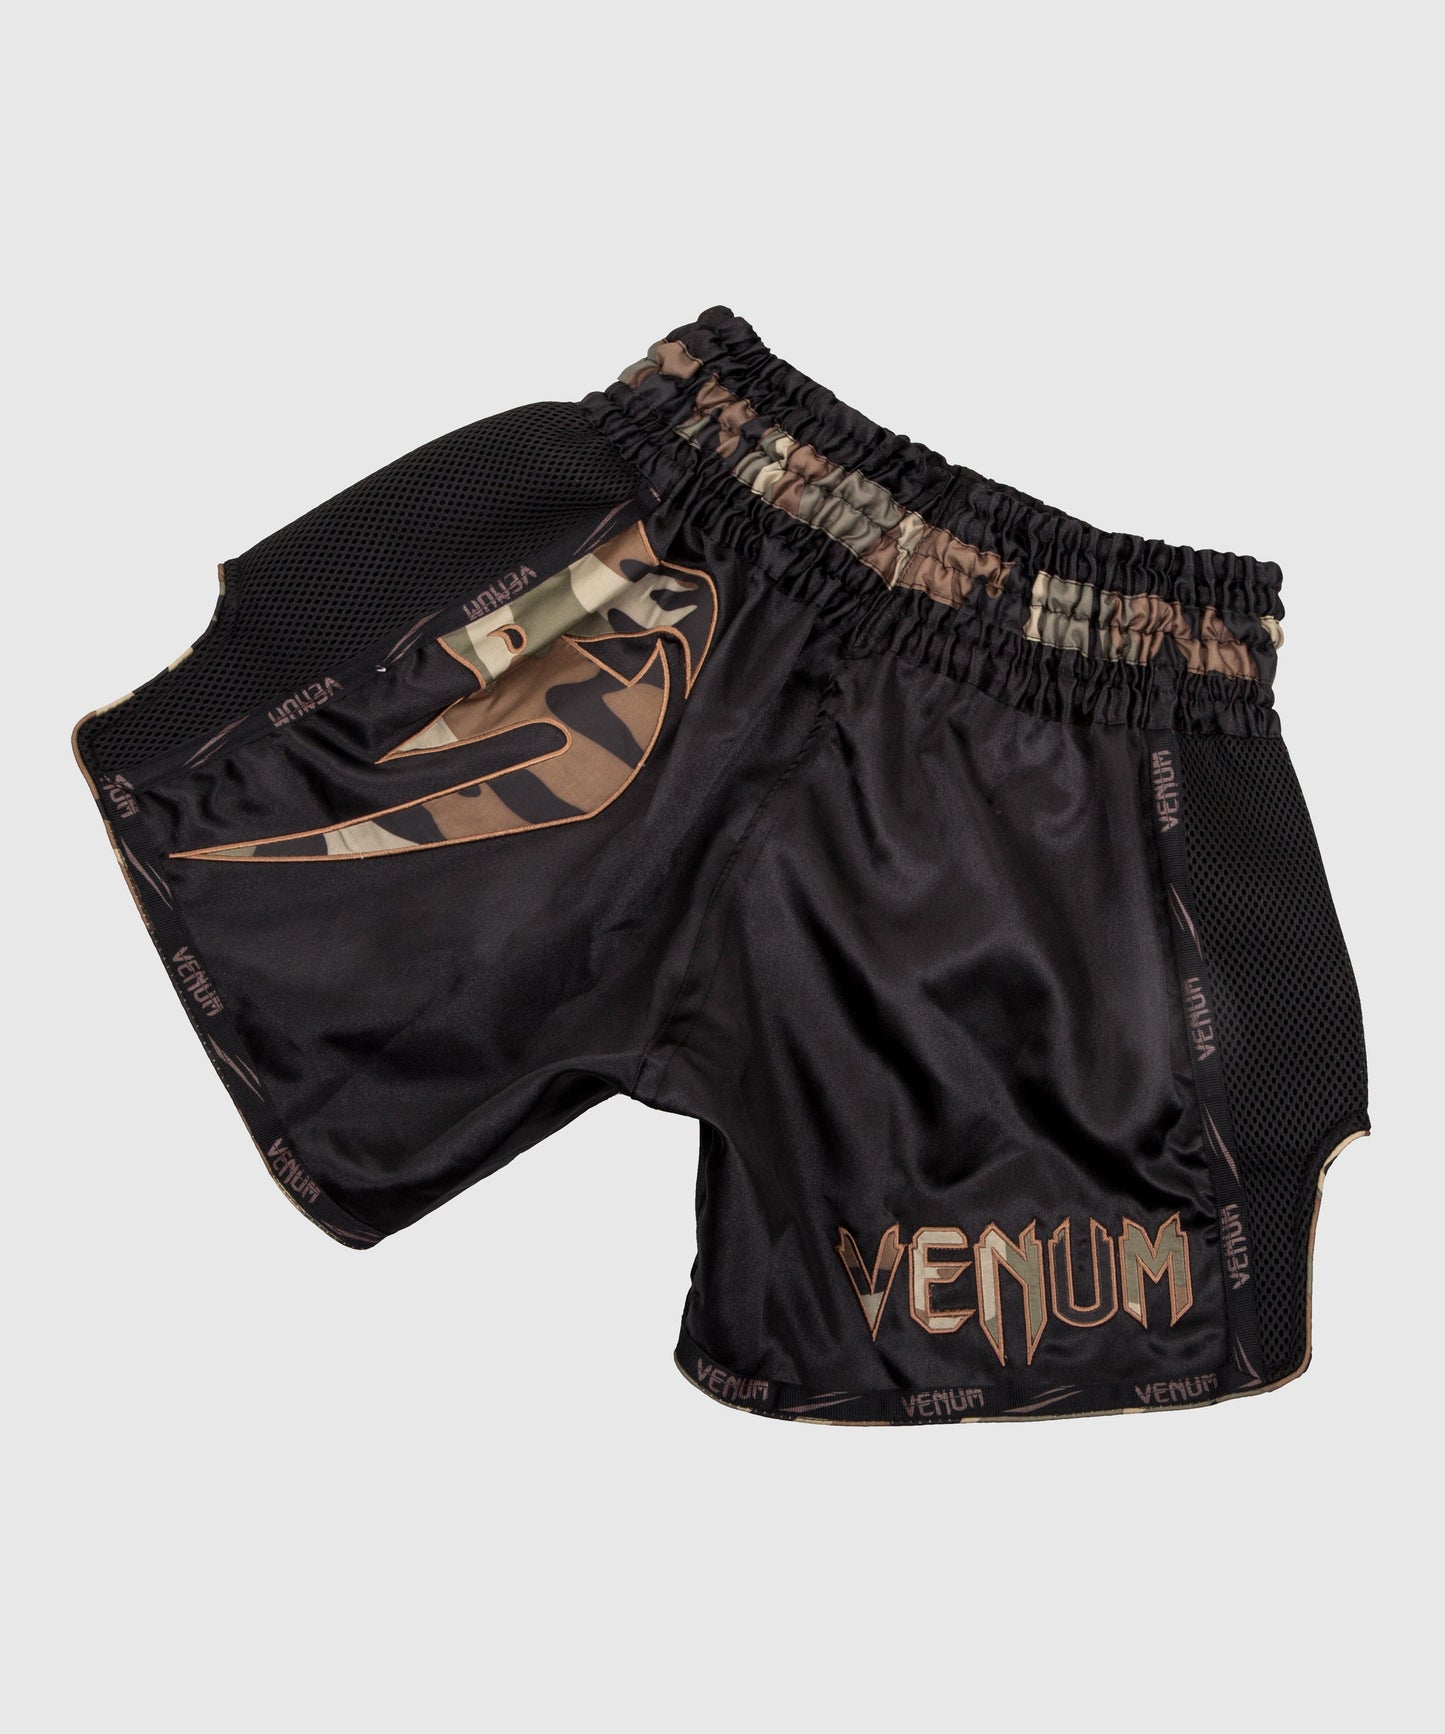 Venum Giant Muay Thai Shorts - Black/Forest Camo